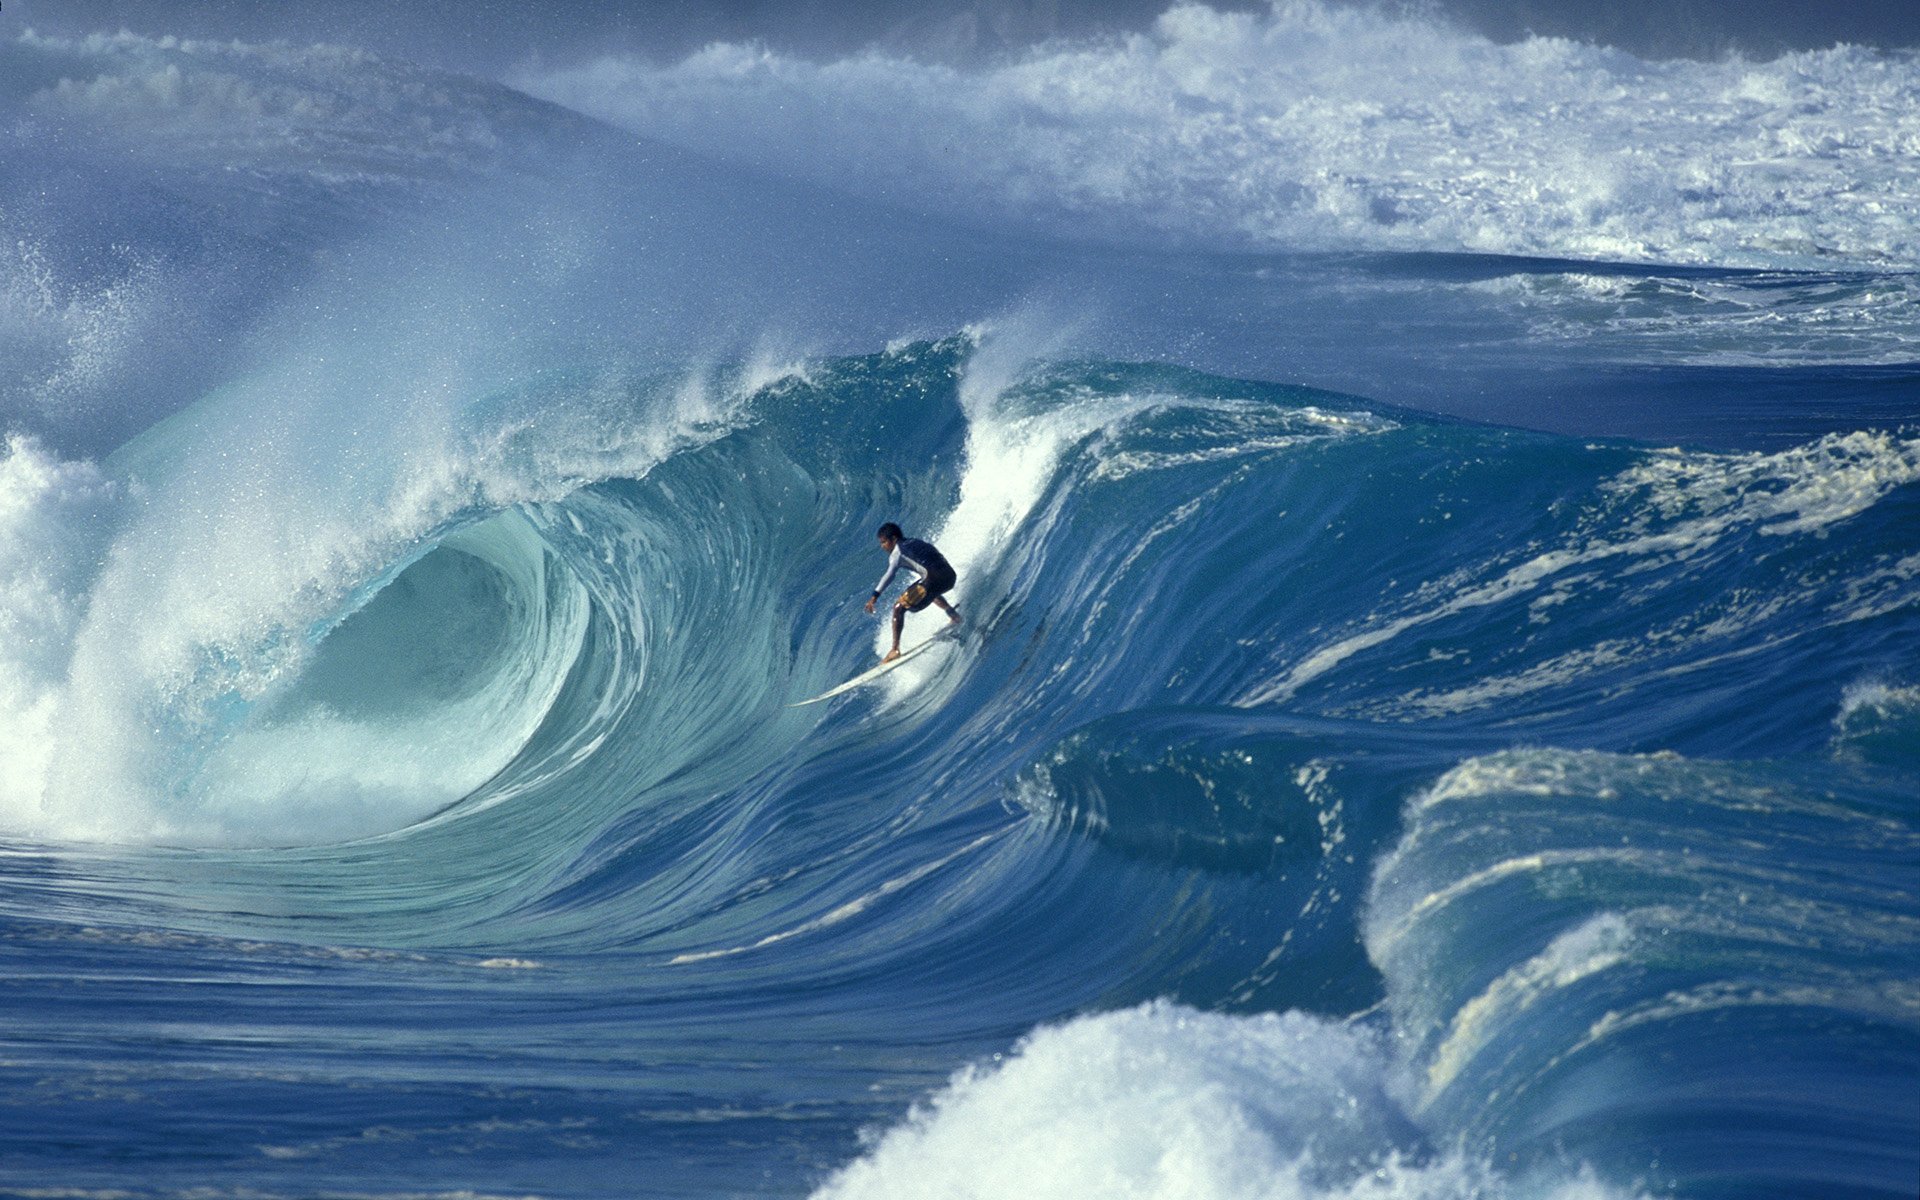 Download Wave Surfing Wallpaper 6725 1920x1200 px High Resolution ...